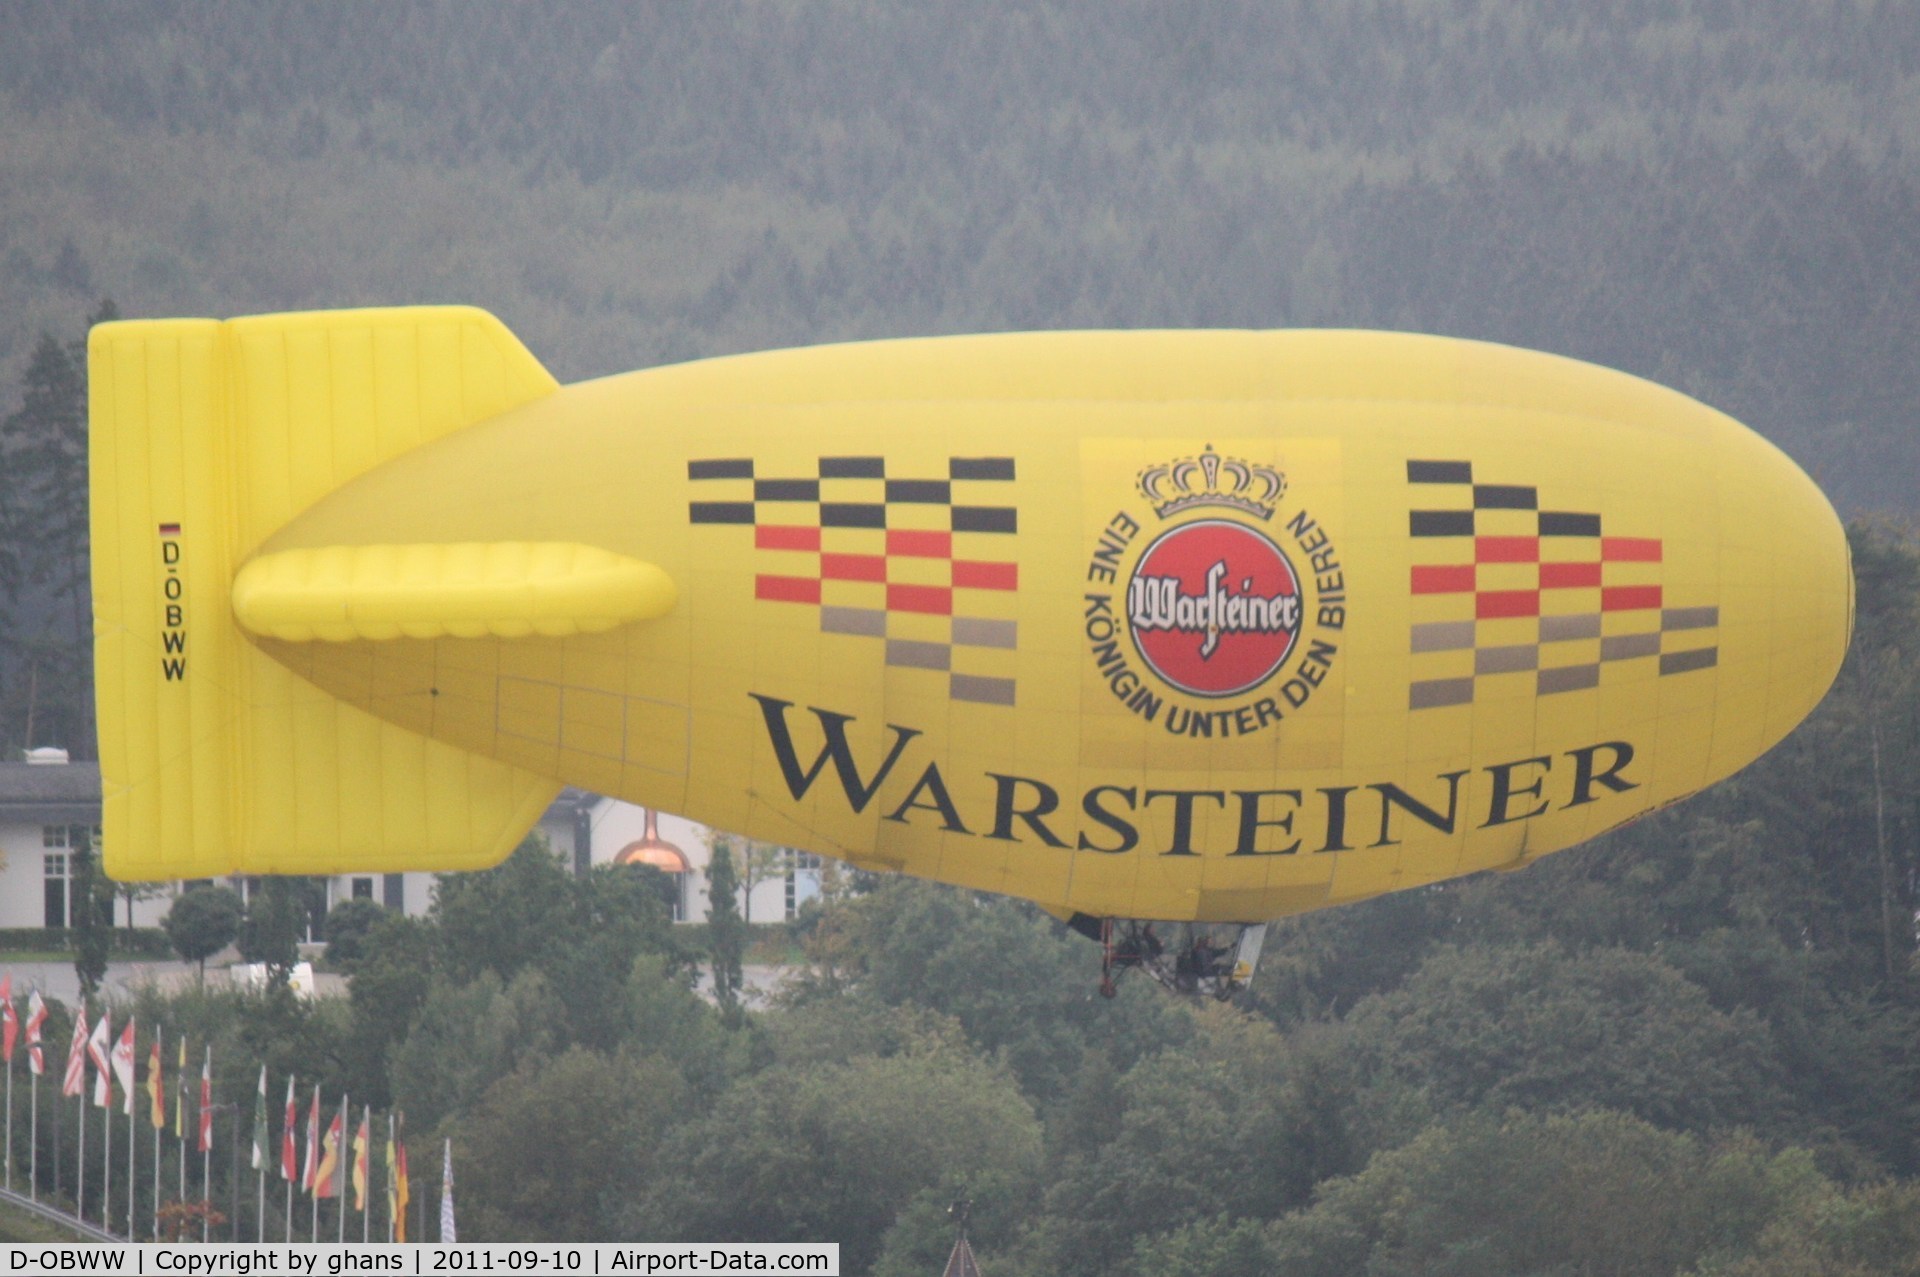 D-OBWW, 2005 Gefa-Flug AS.105 C/N 7, WIM 2011
'Warsteiner'